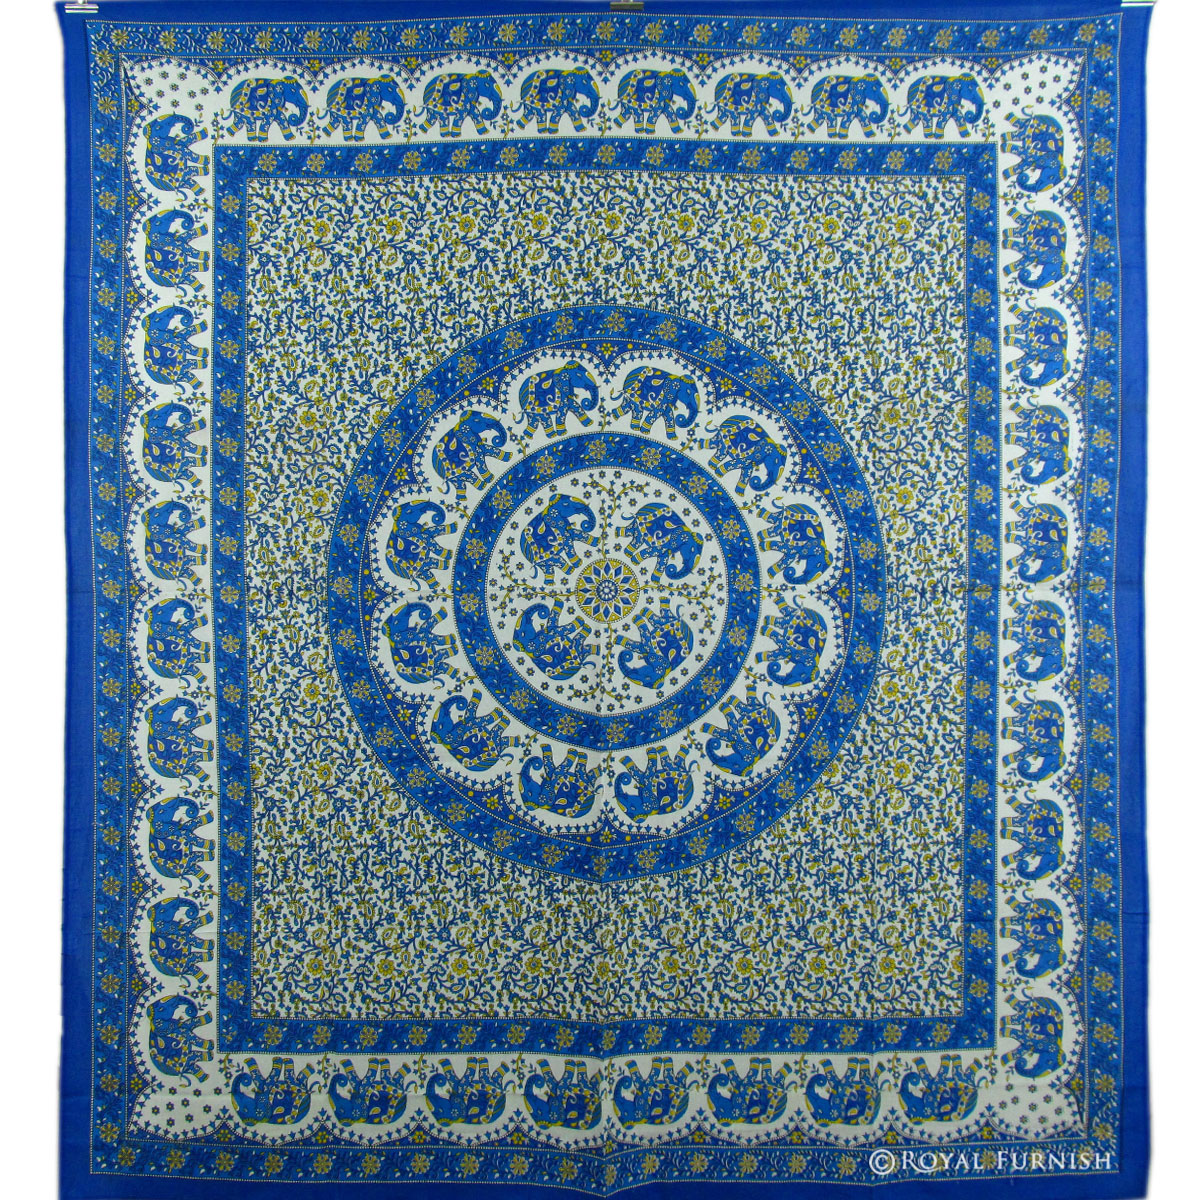 Blue Indian Elephant Mandala Dorm Decor Tapestry Wall Hanging ...